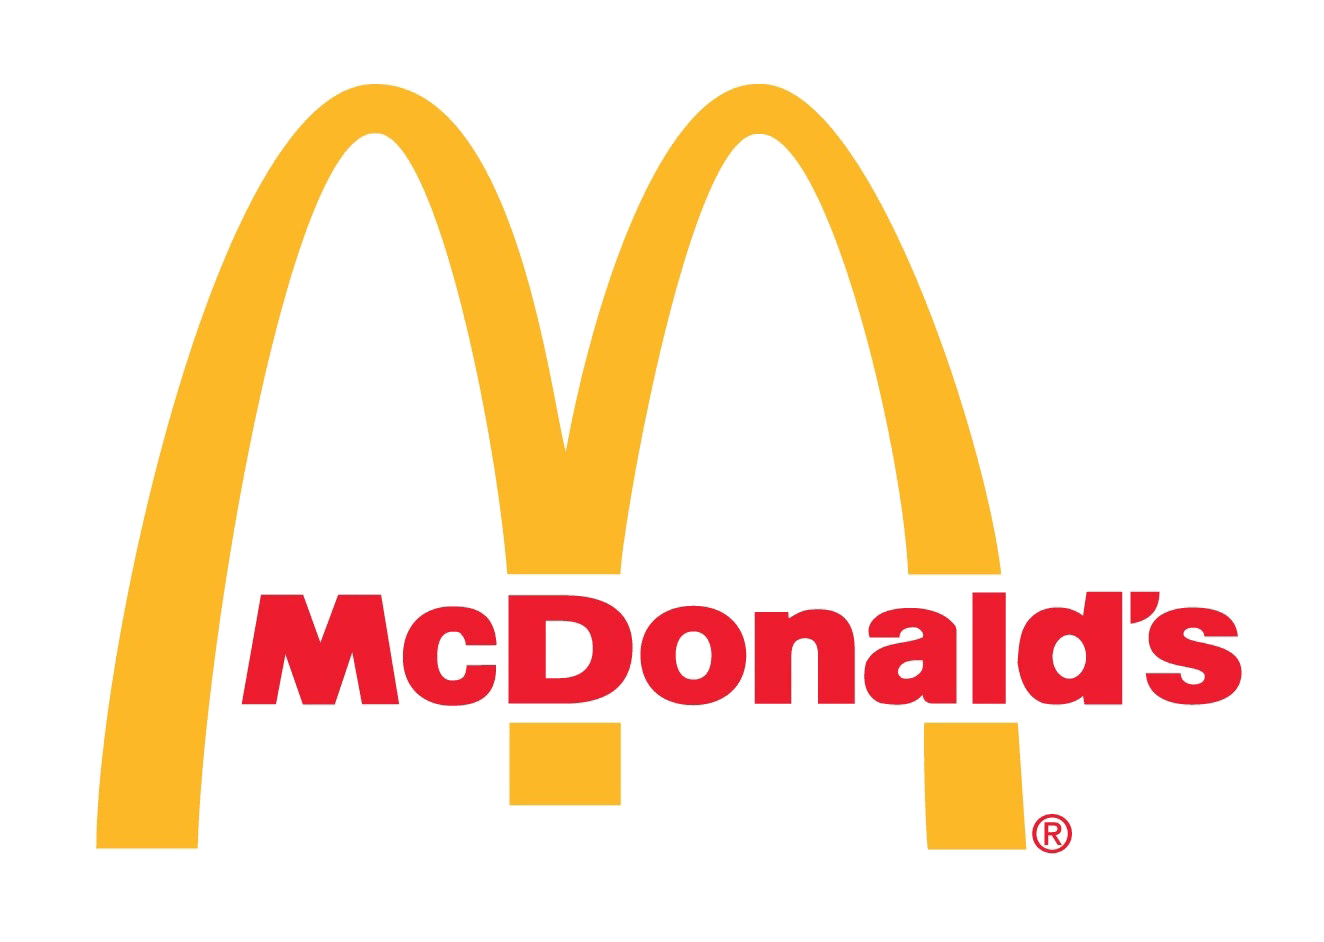 McDonald's Word Logo - McDonald's logo PNG images free download